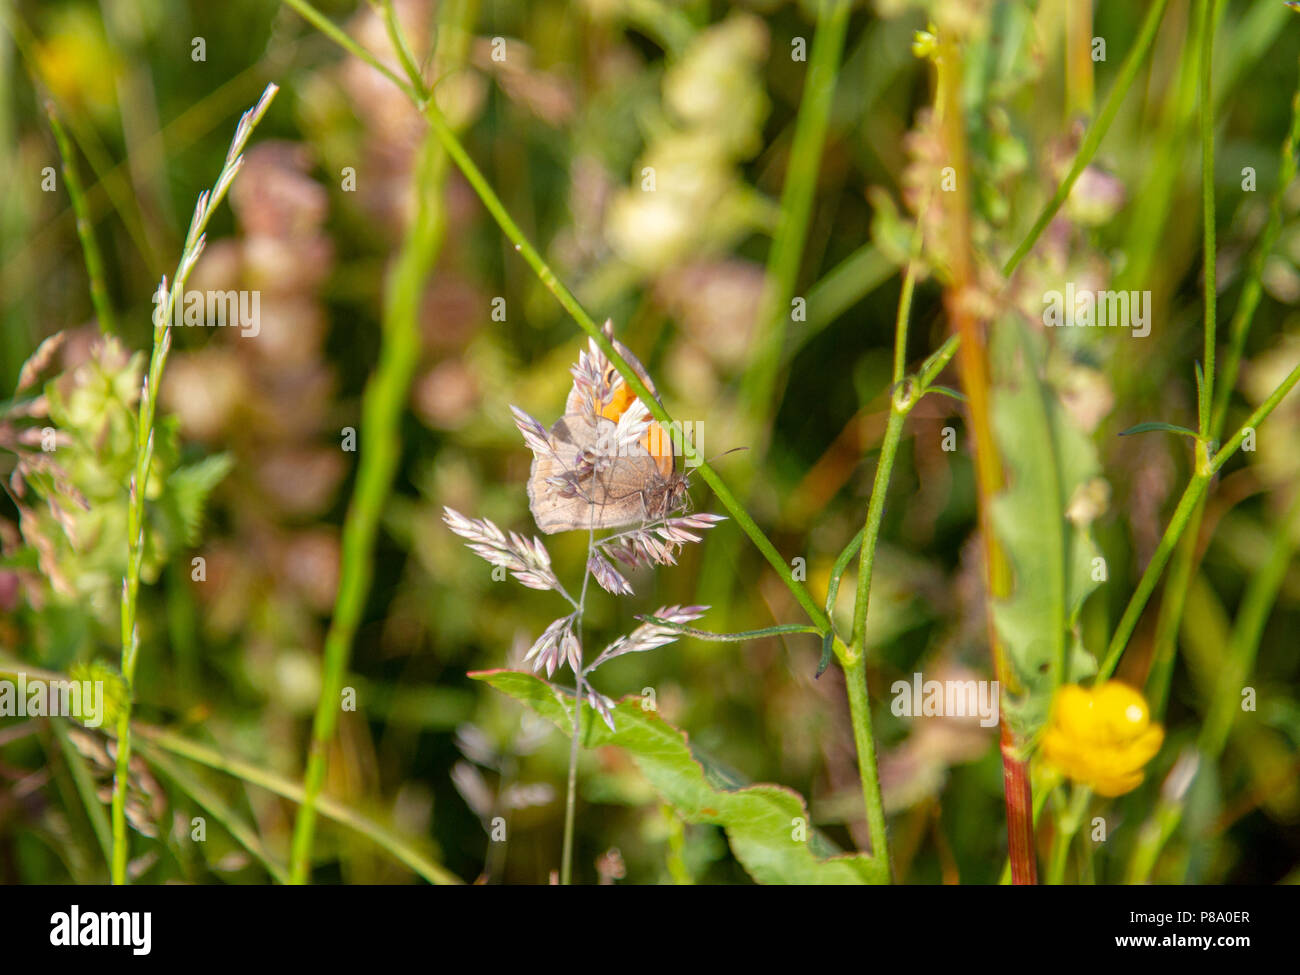 Small heath butterfly on grass stalk Stock Photo